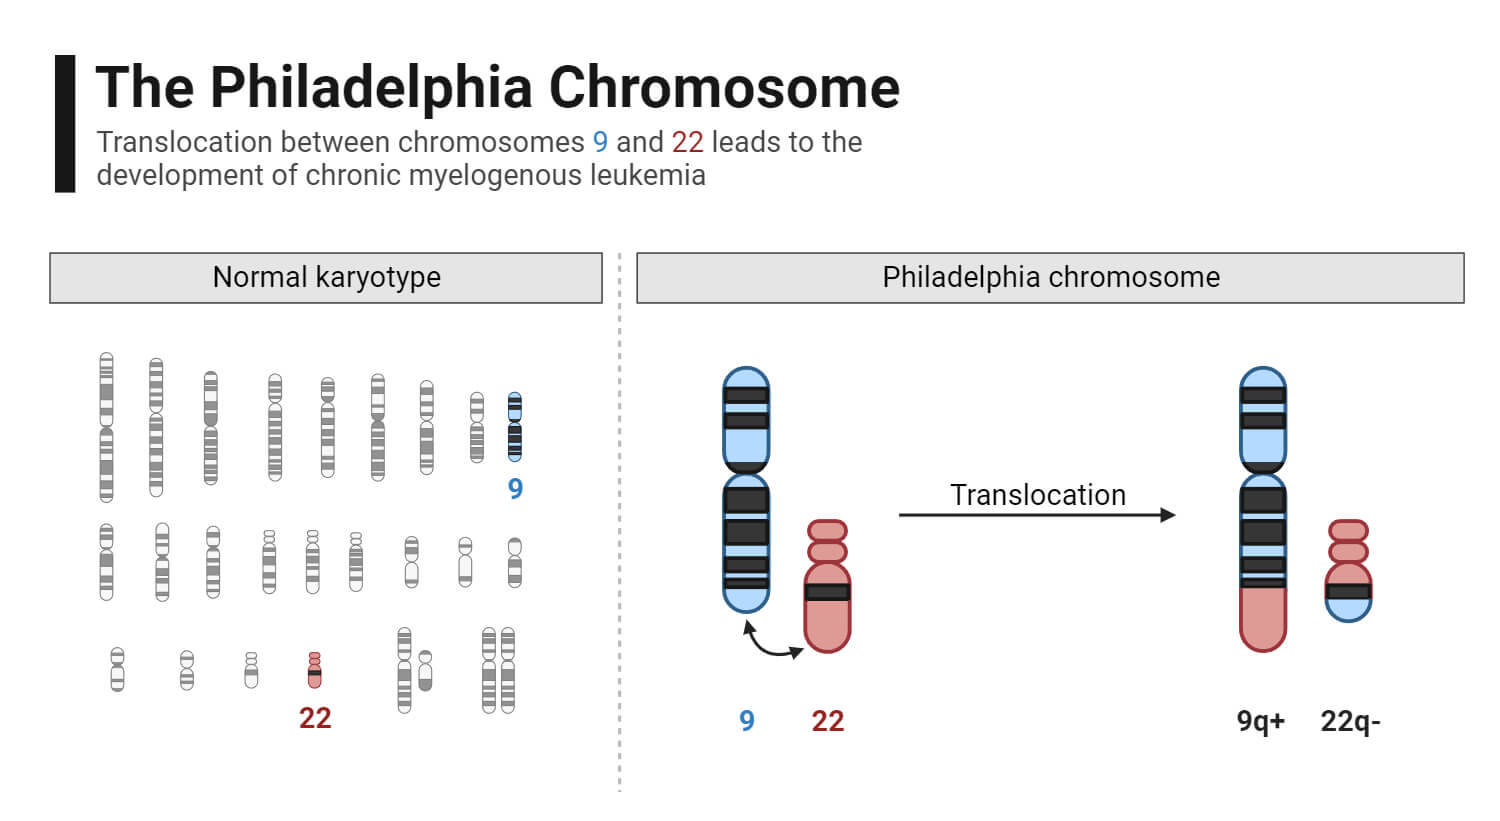 Translocation- The Philadelphia Chromosome